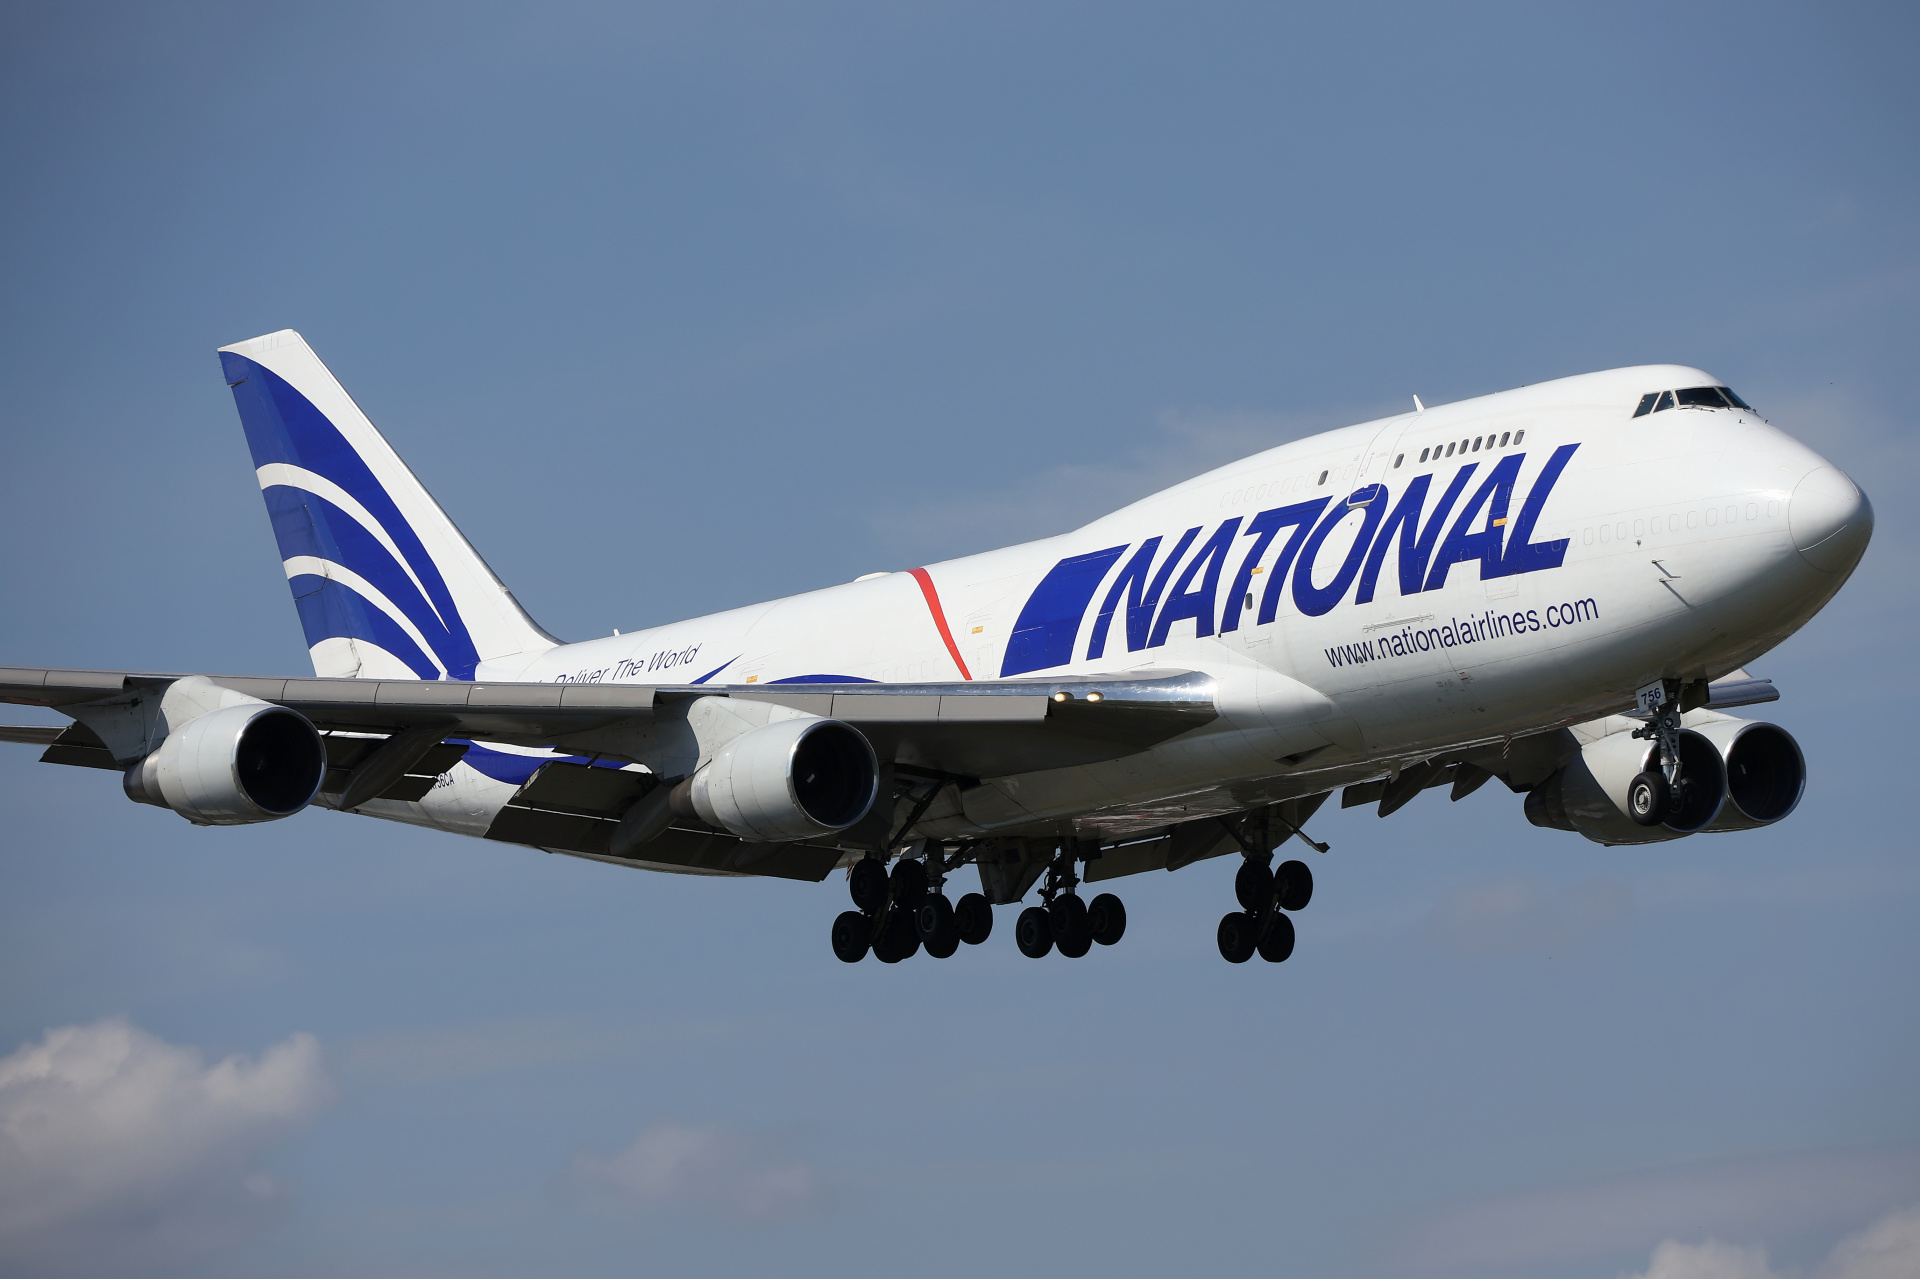 BCF, N756CA (Aircraft » EPWA Spotting » Boeing 747-400F » National Air Cargo)